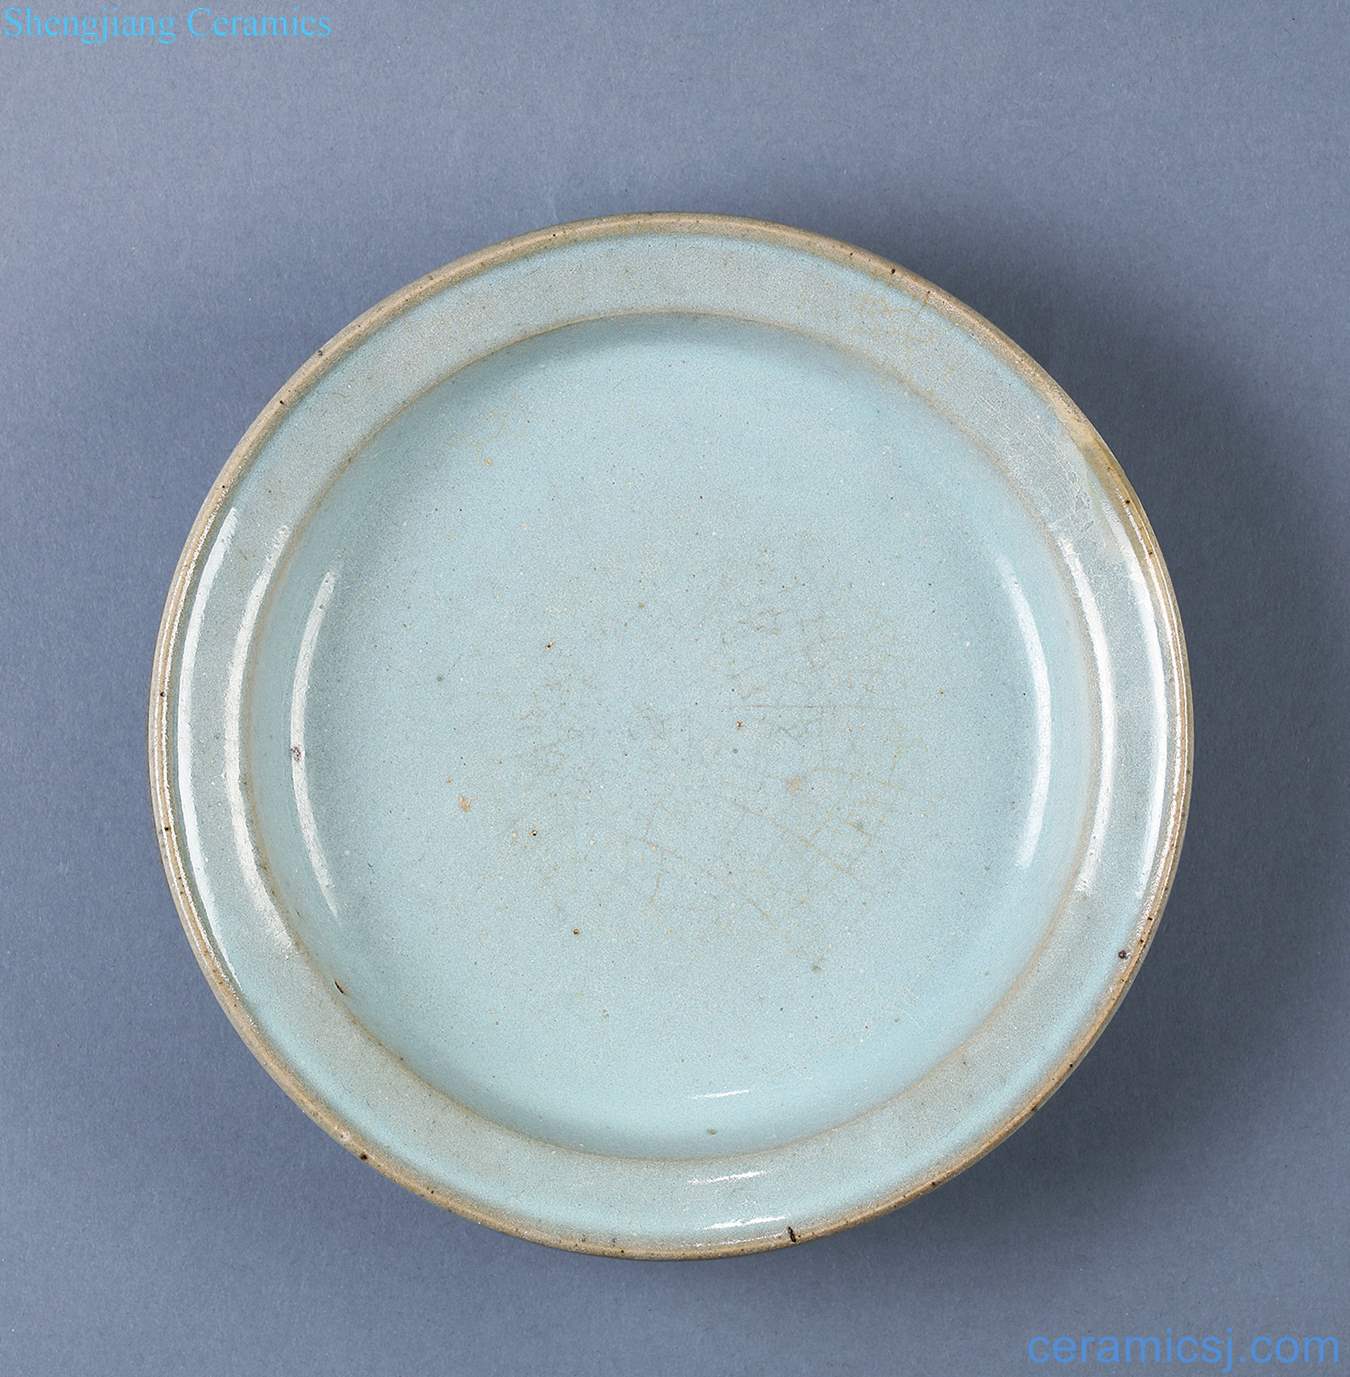 yuan Jun glaze fold along the plate